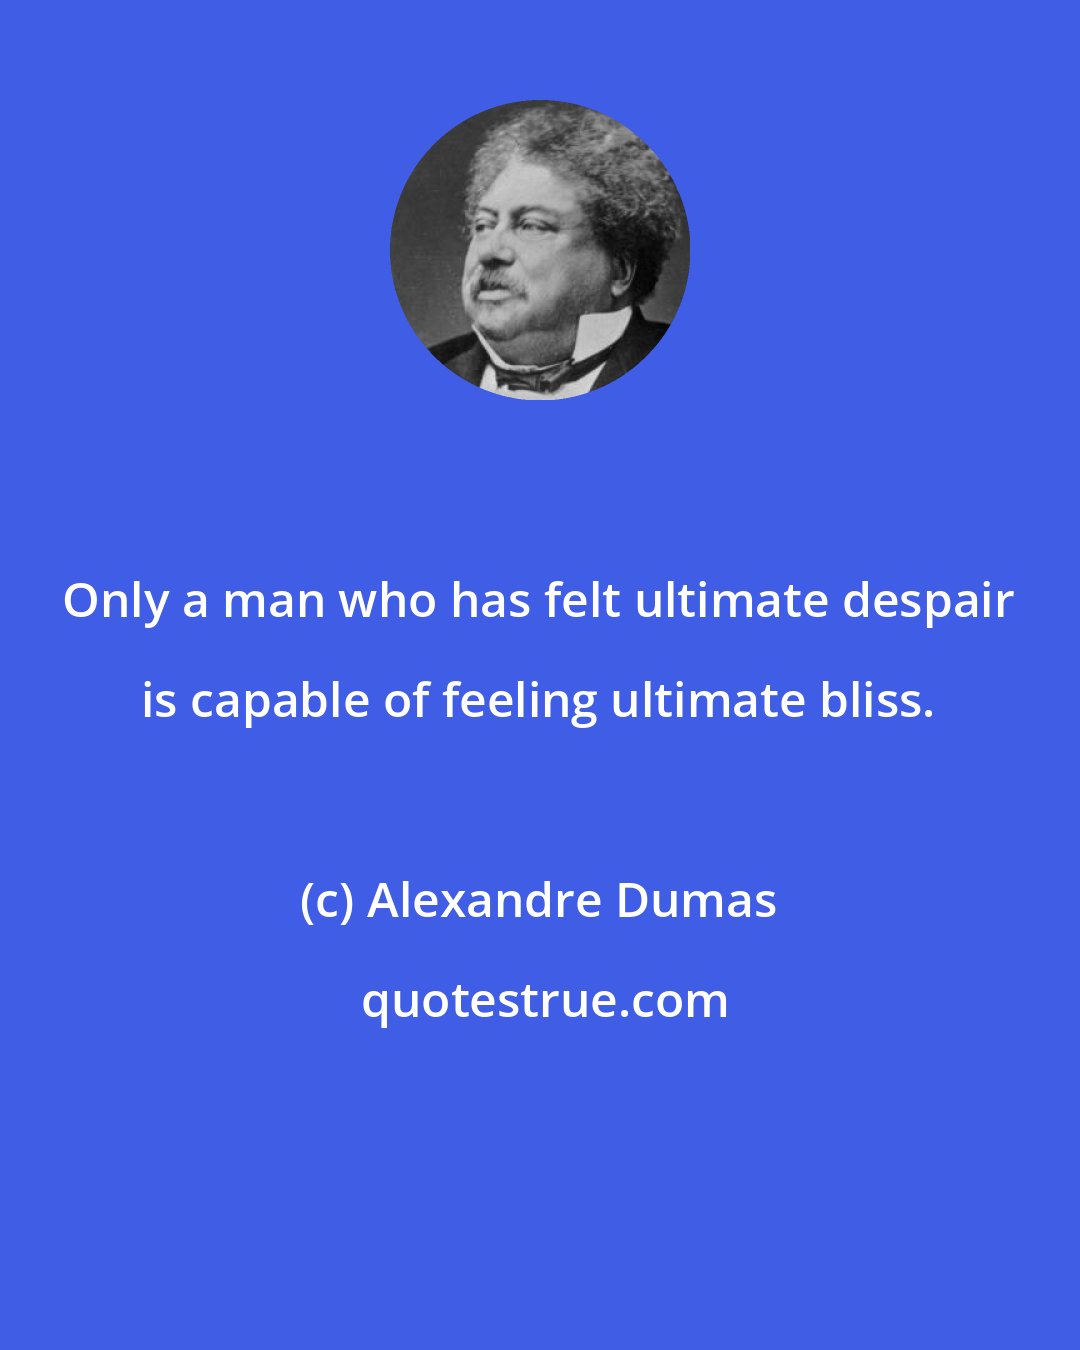 Alexandre Dumas: Only a man who has felt ultimate despair is capable of feeling ultimate bliss.